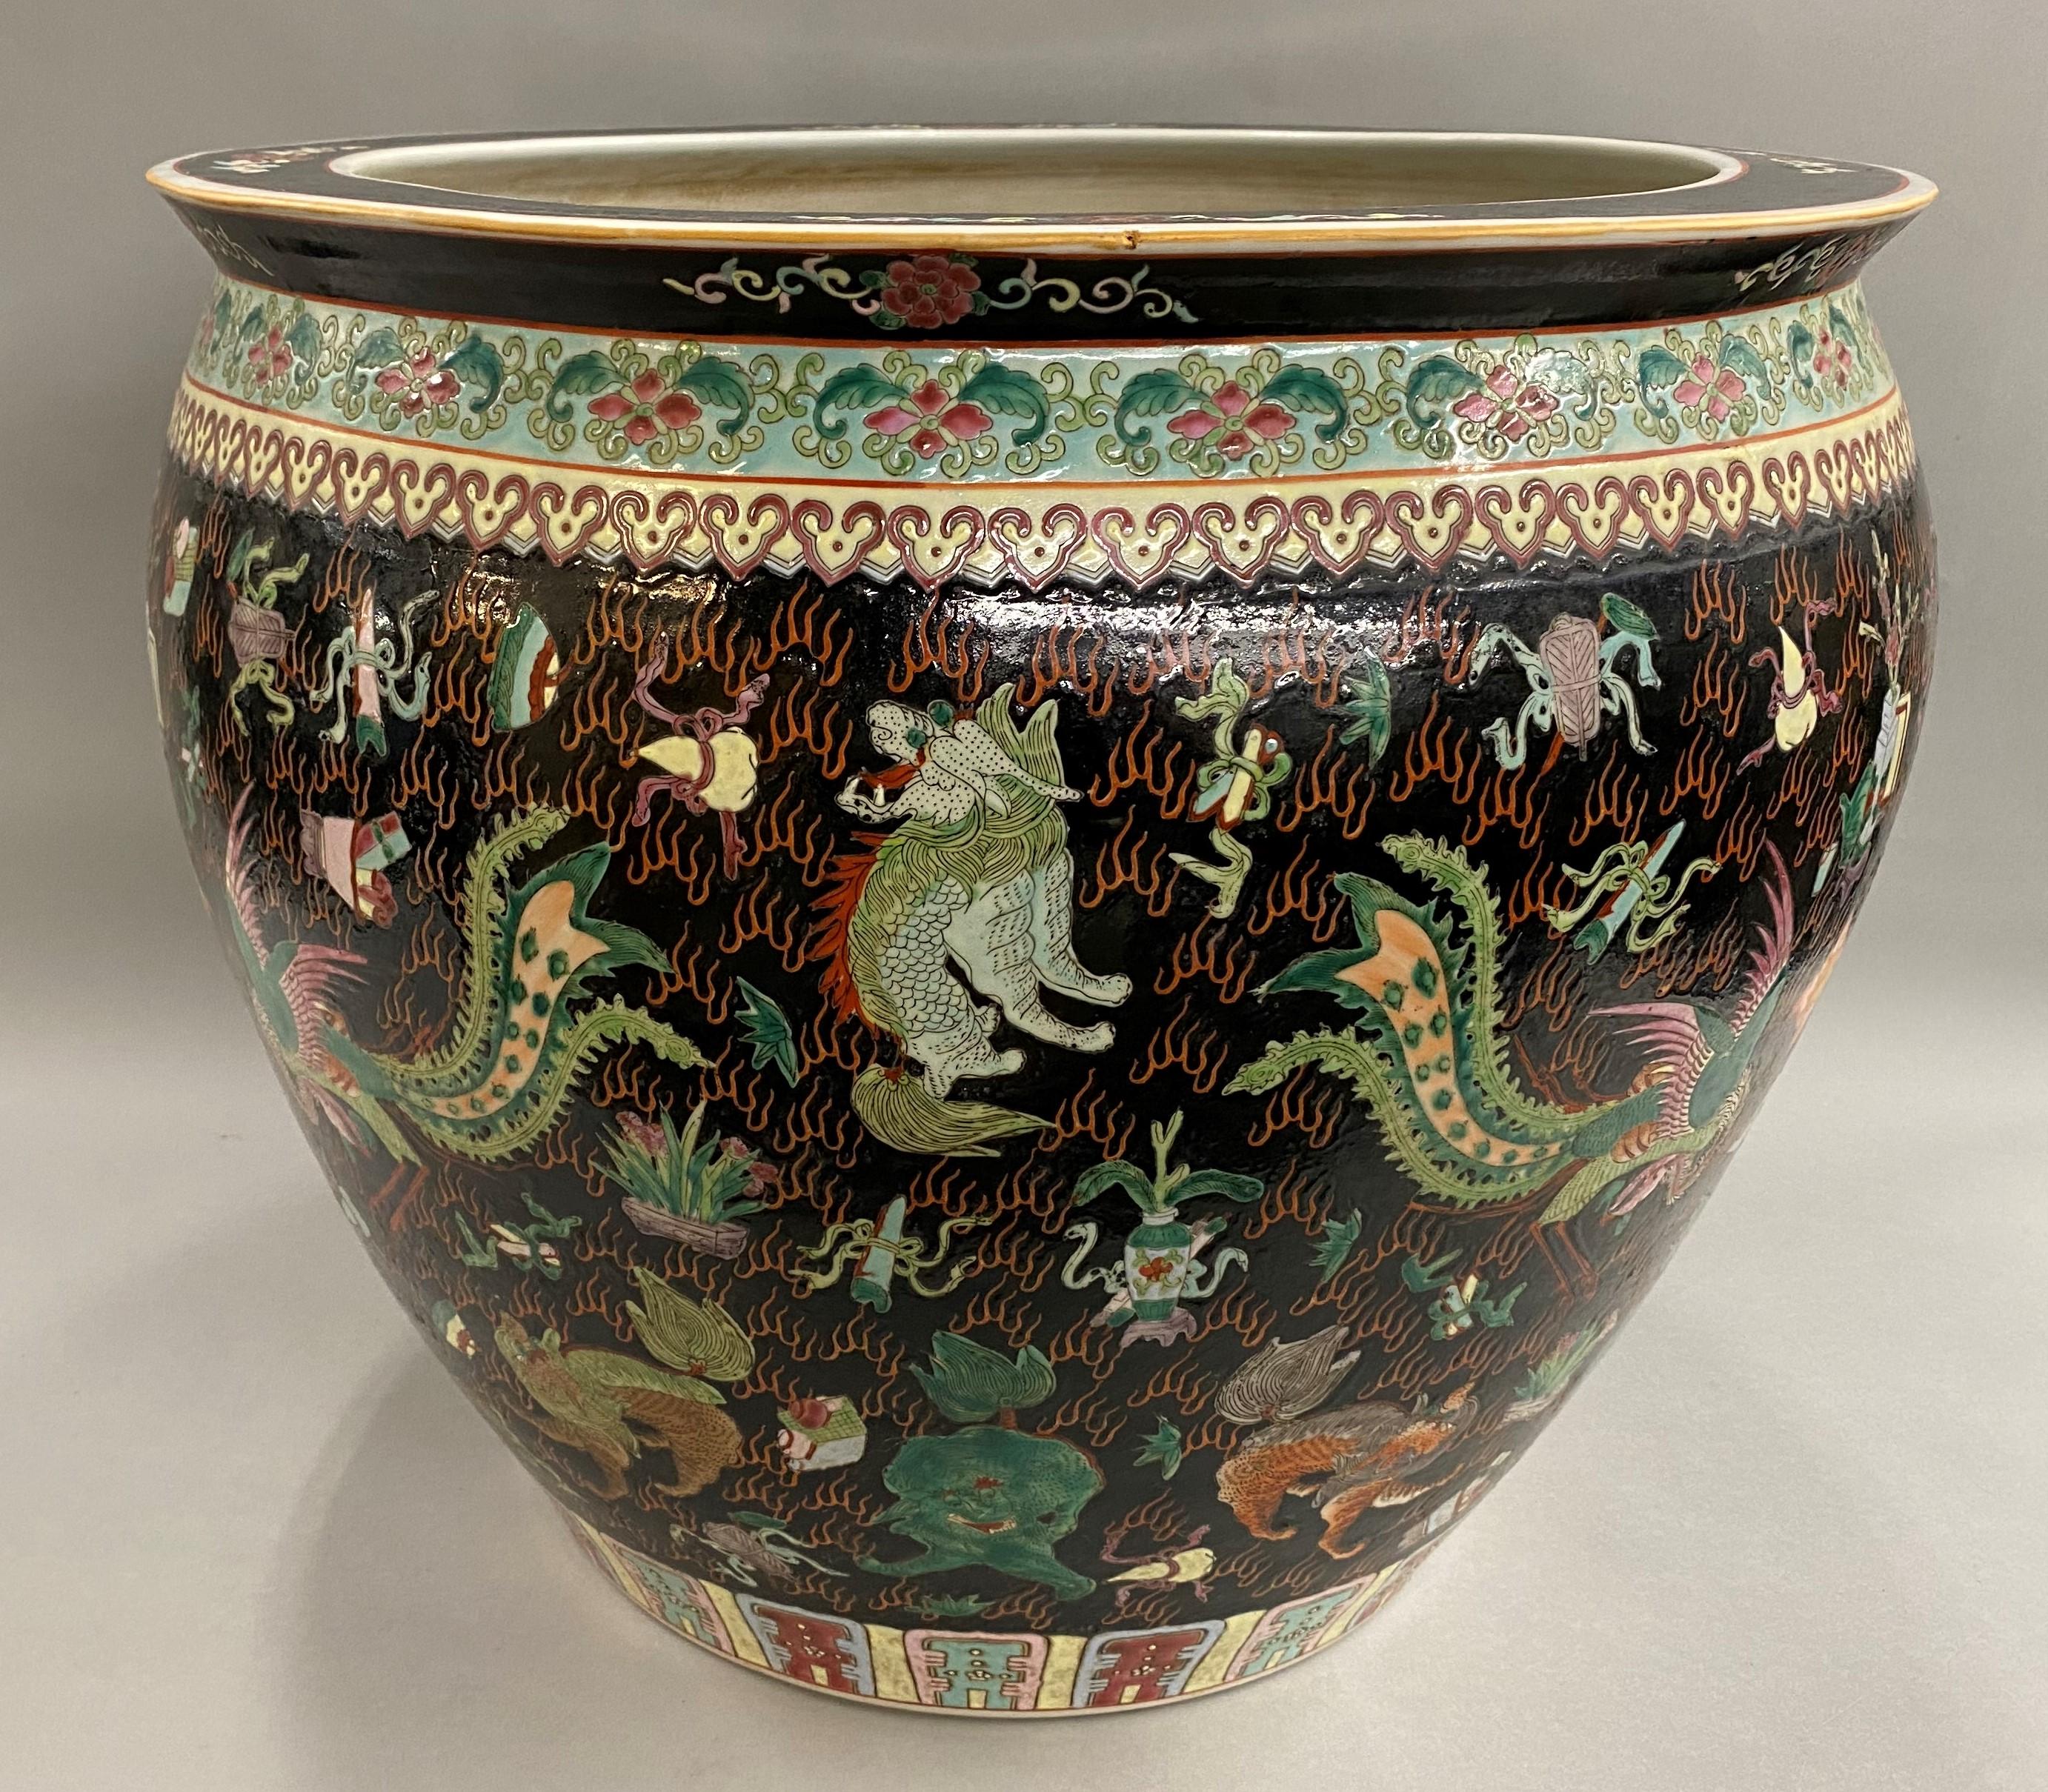 Polychromed Fine Vintage Chinese Polychrome Porcelain Jardinière or Palace Bowl